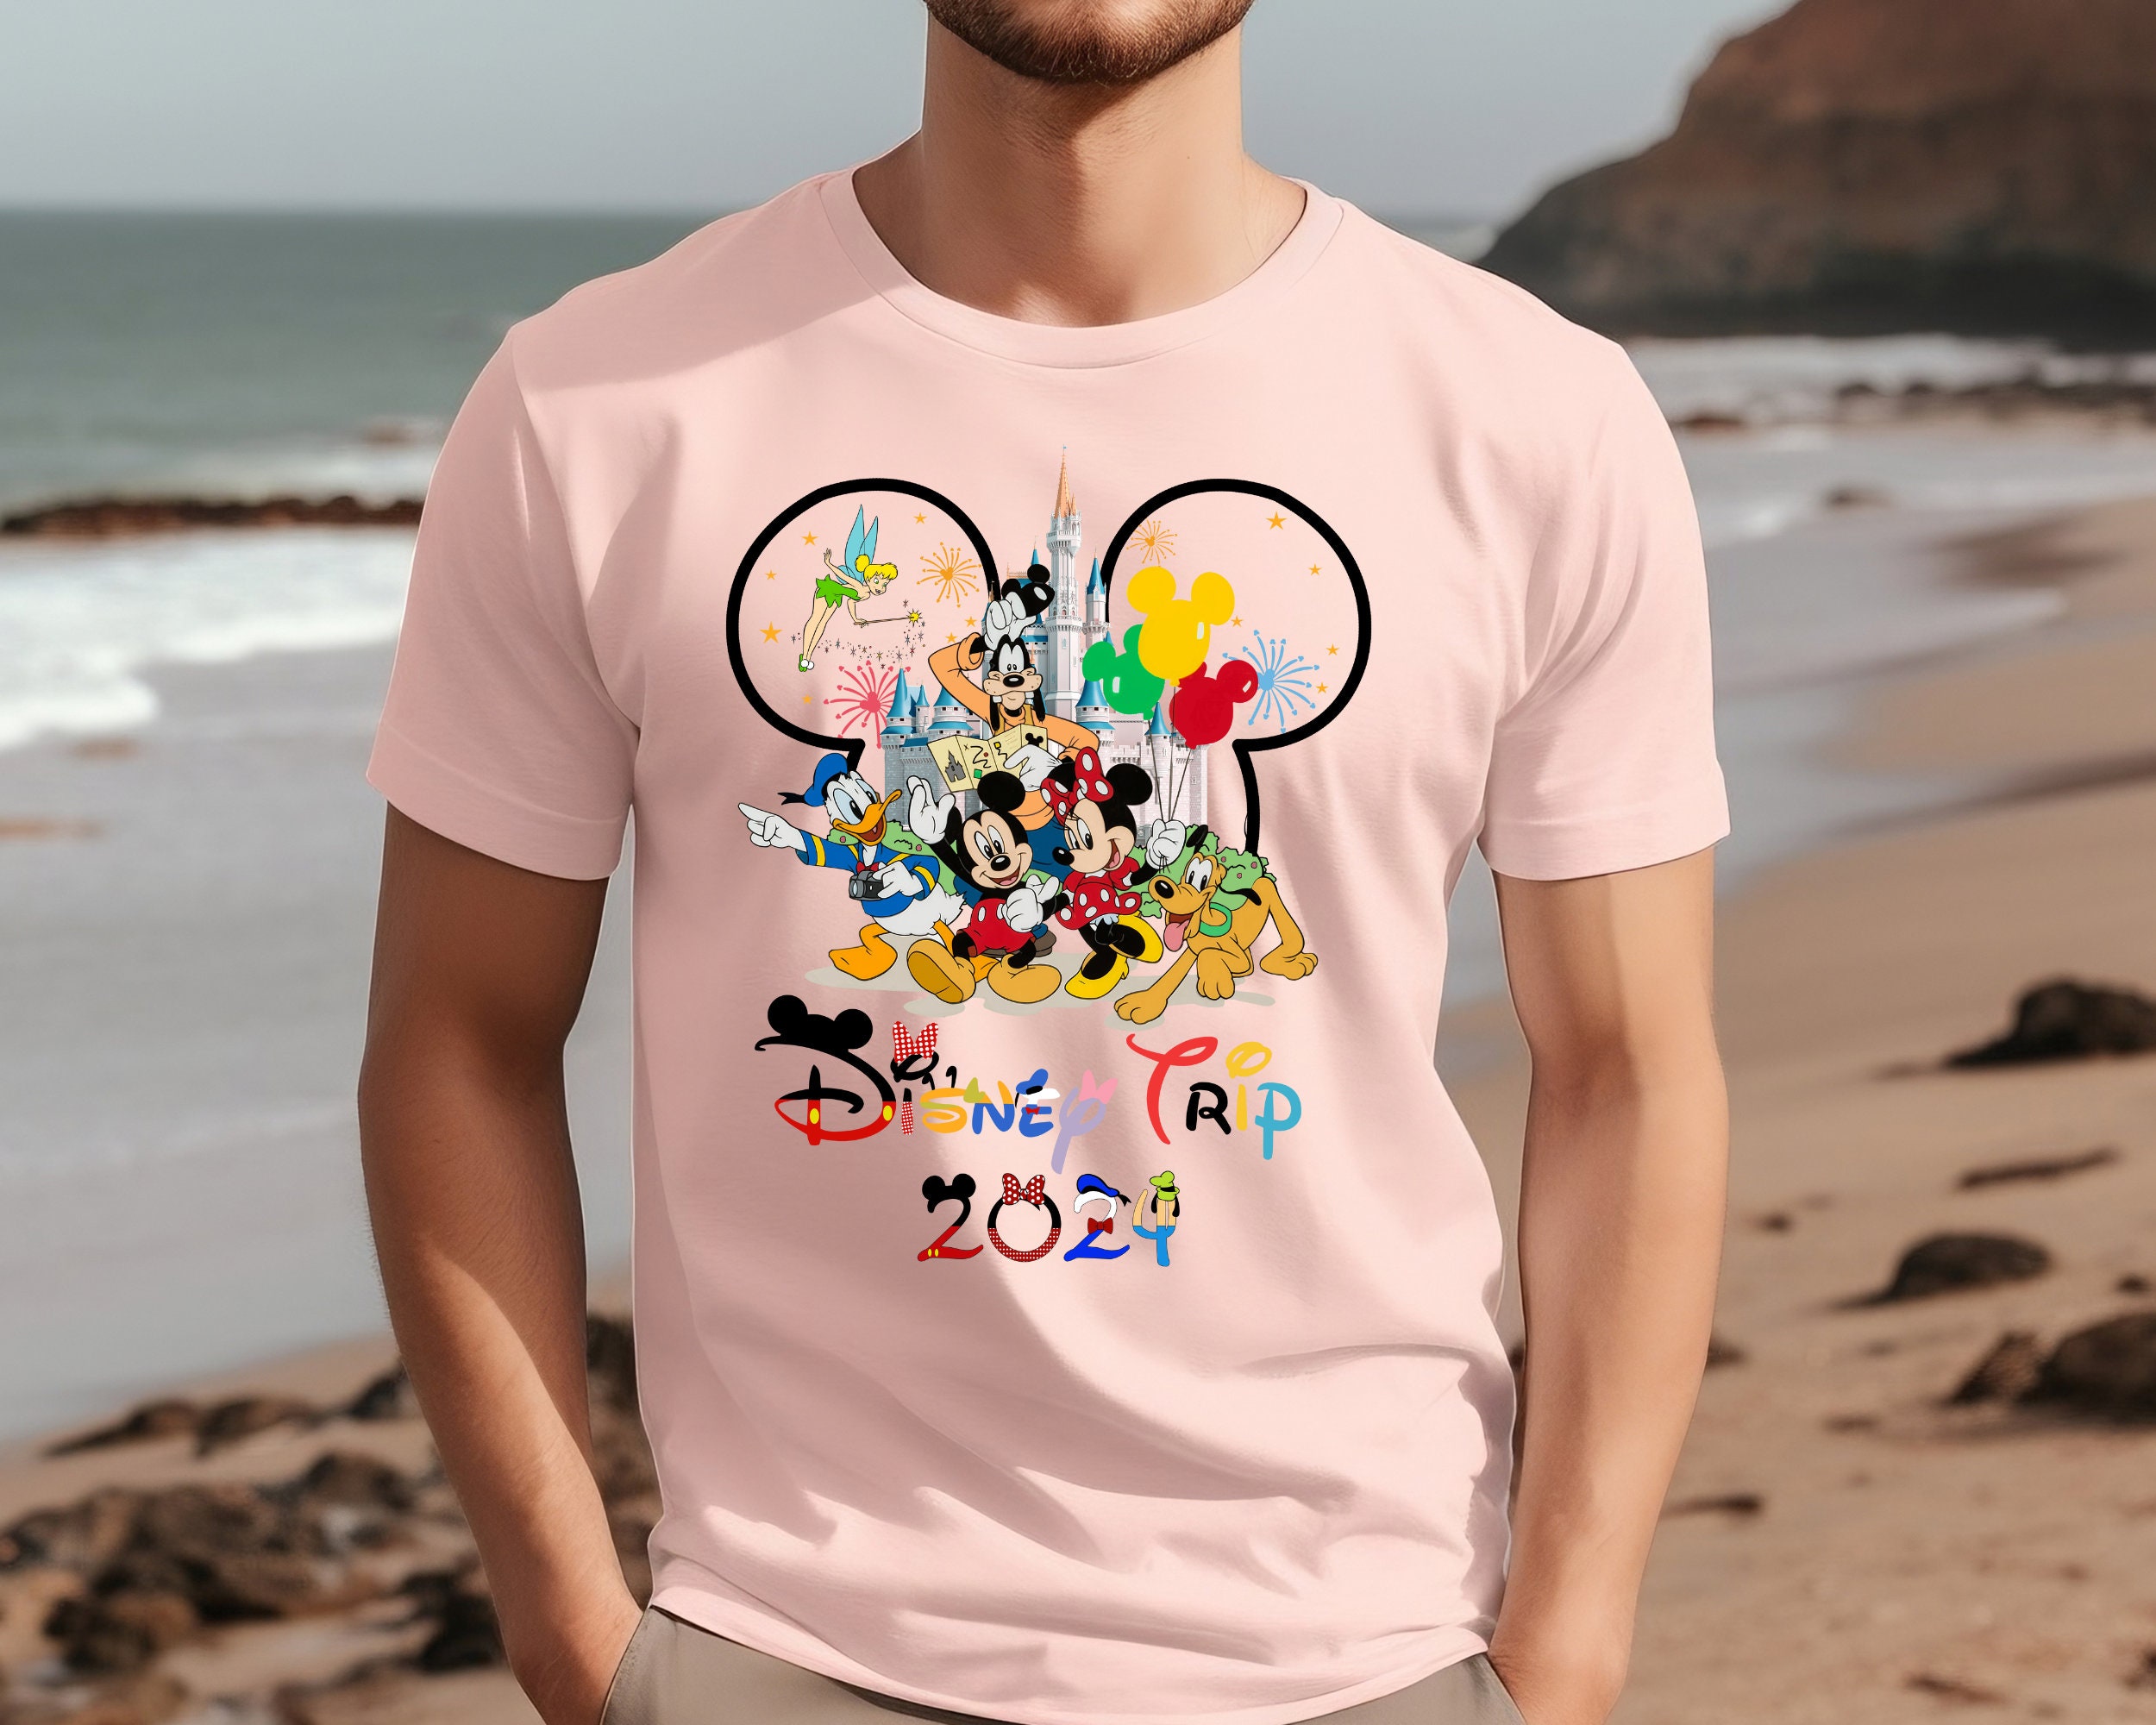 Disney Trip 2024 Shirt, Disney Family Tee, Family 2024 Disneyworld